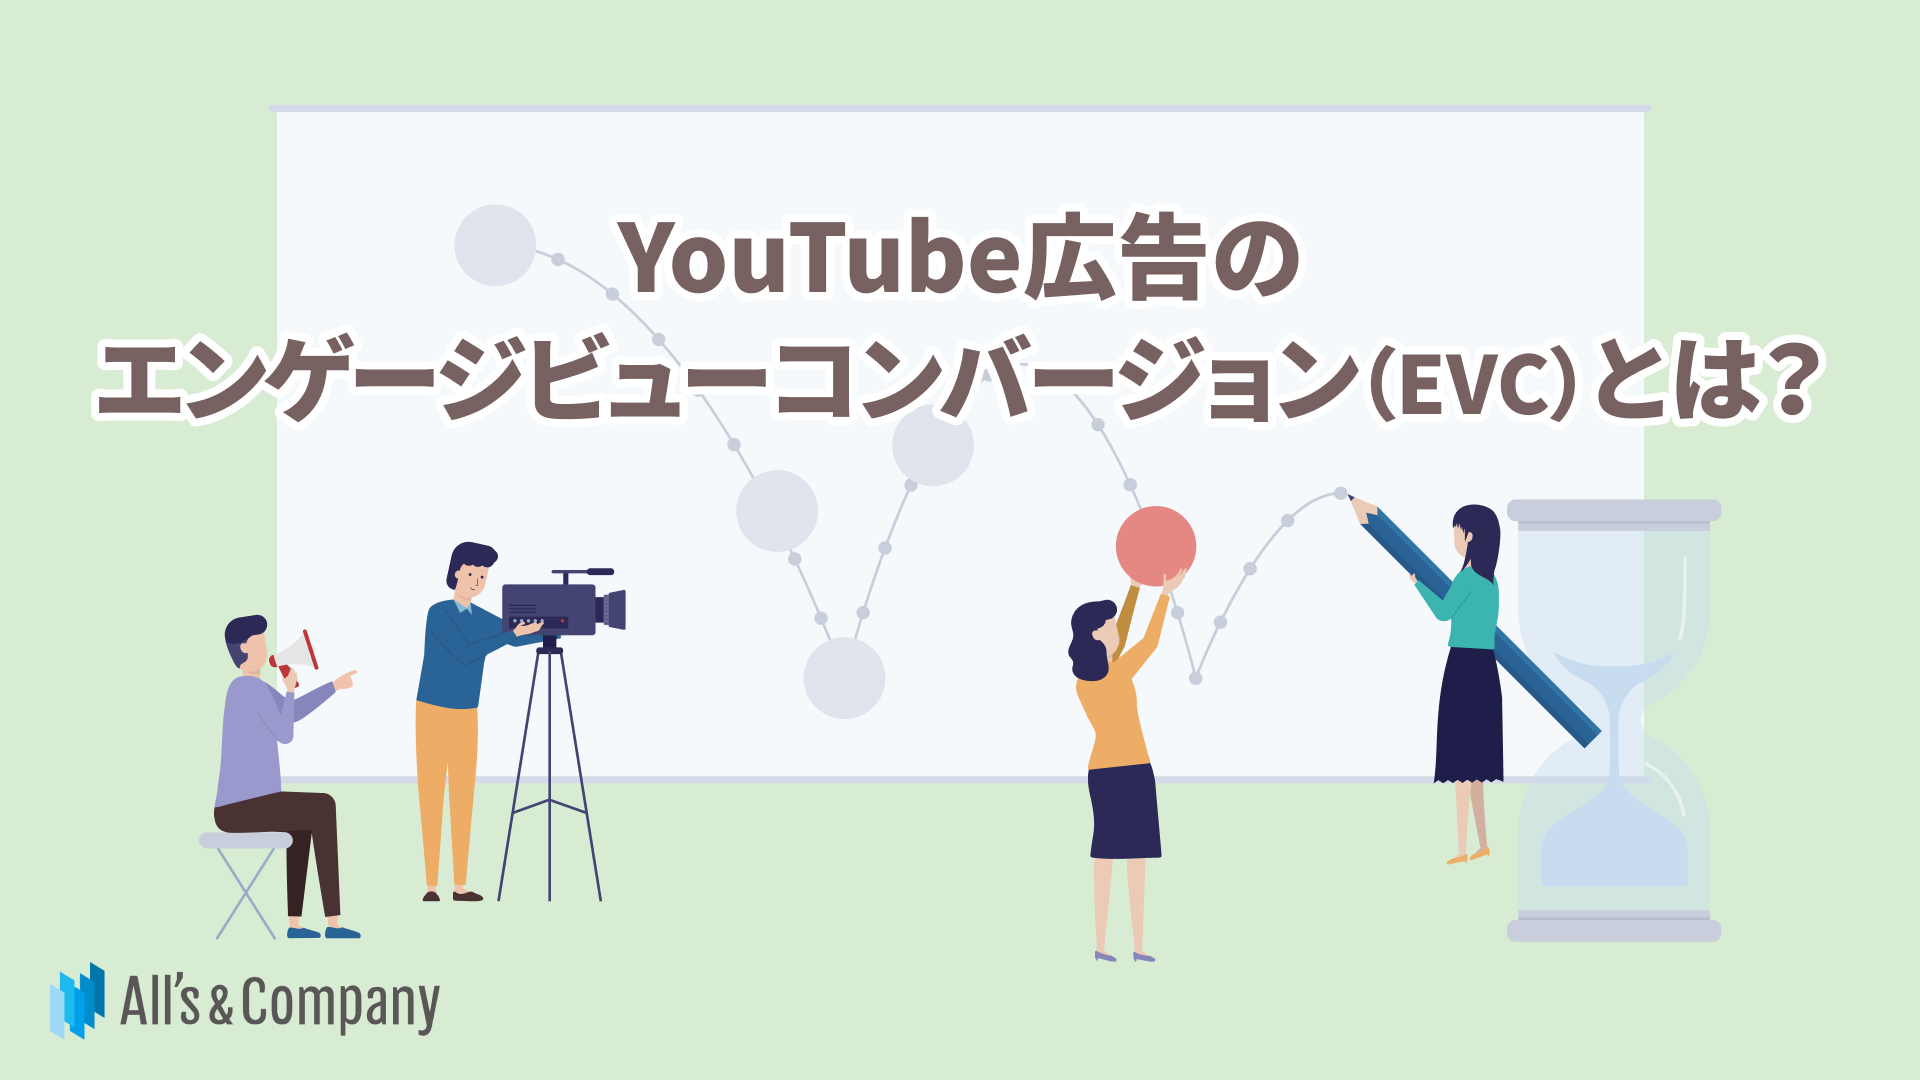 YouTube広告のエンゲージビューコンバージョン(EVC)とは？